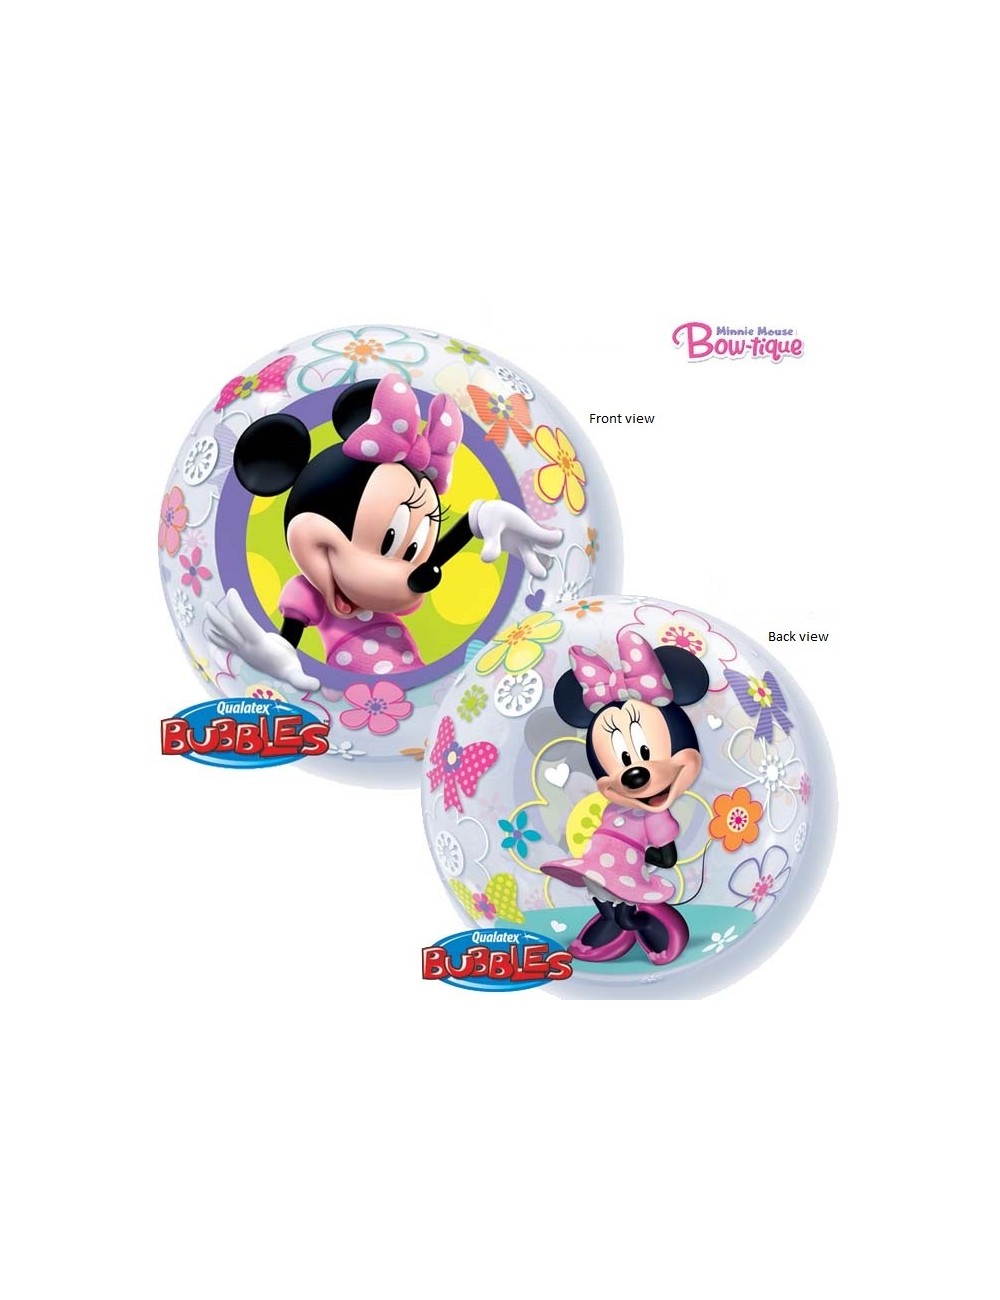 Bubble Minnie Bow-tique balloon